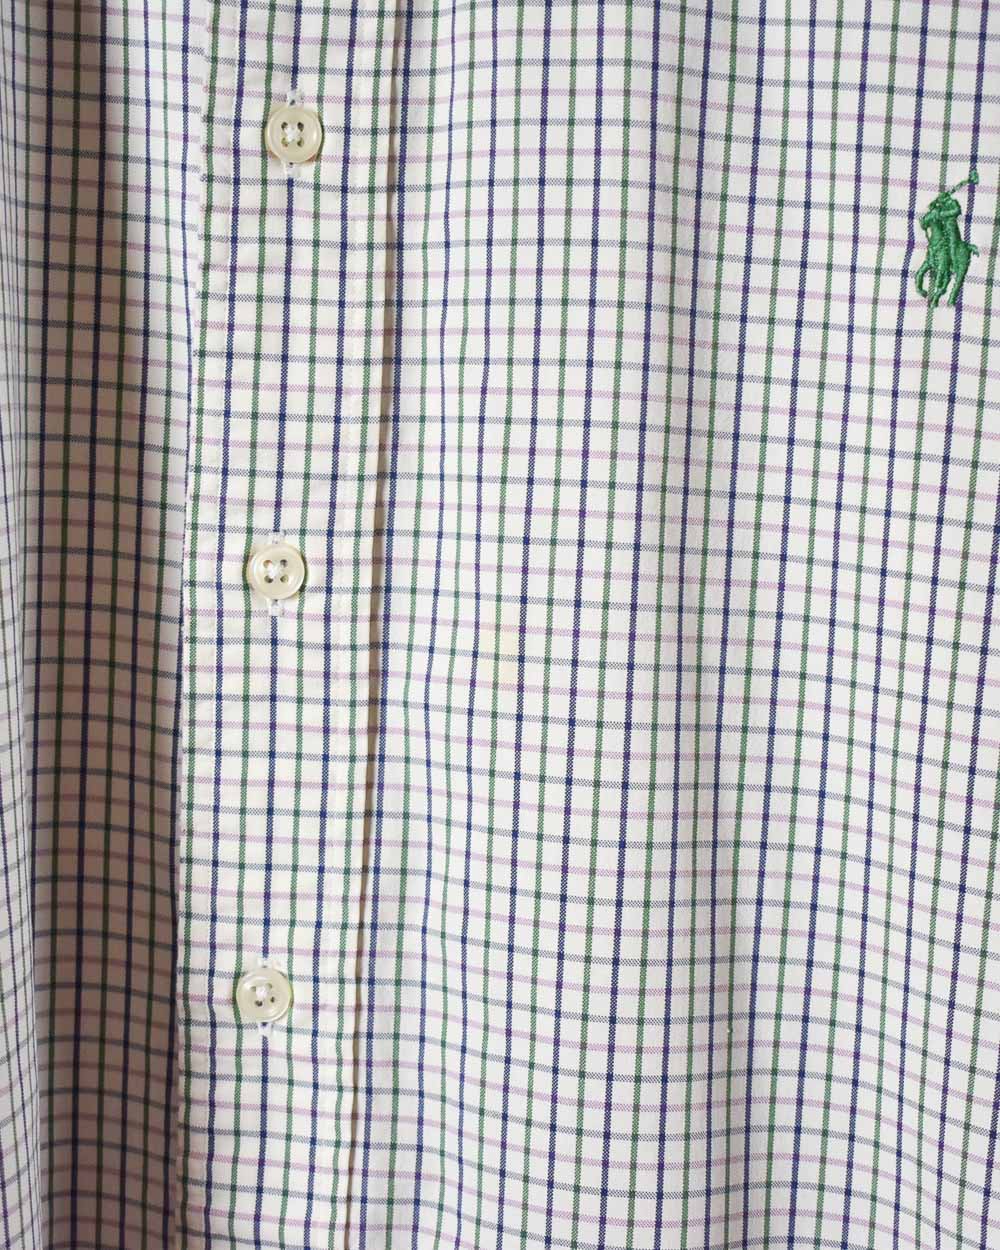 Neutral Polo Ralph Lauren Checked Shirt - XX-Large